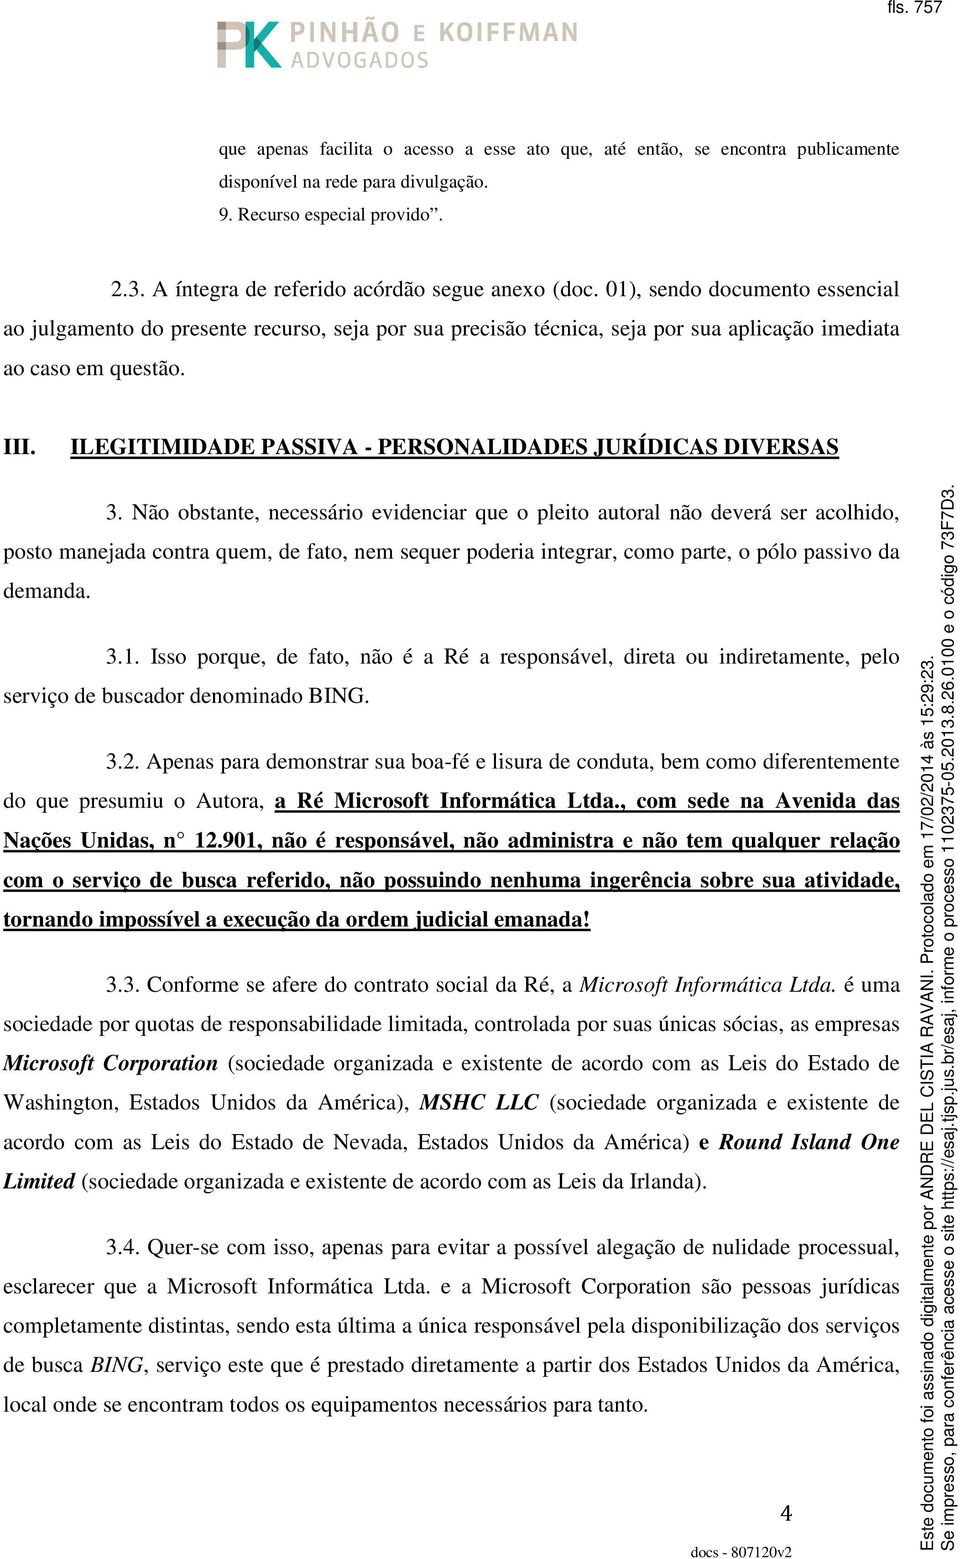 III. ILEGITIMIDADE PASSIVA - PERSONALIDADES JURÍDICAS DIVERSAS 3.